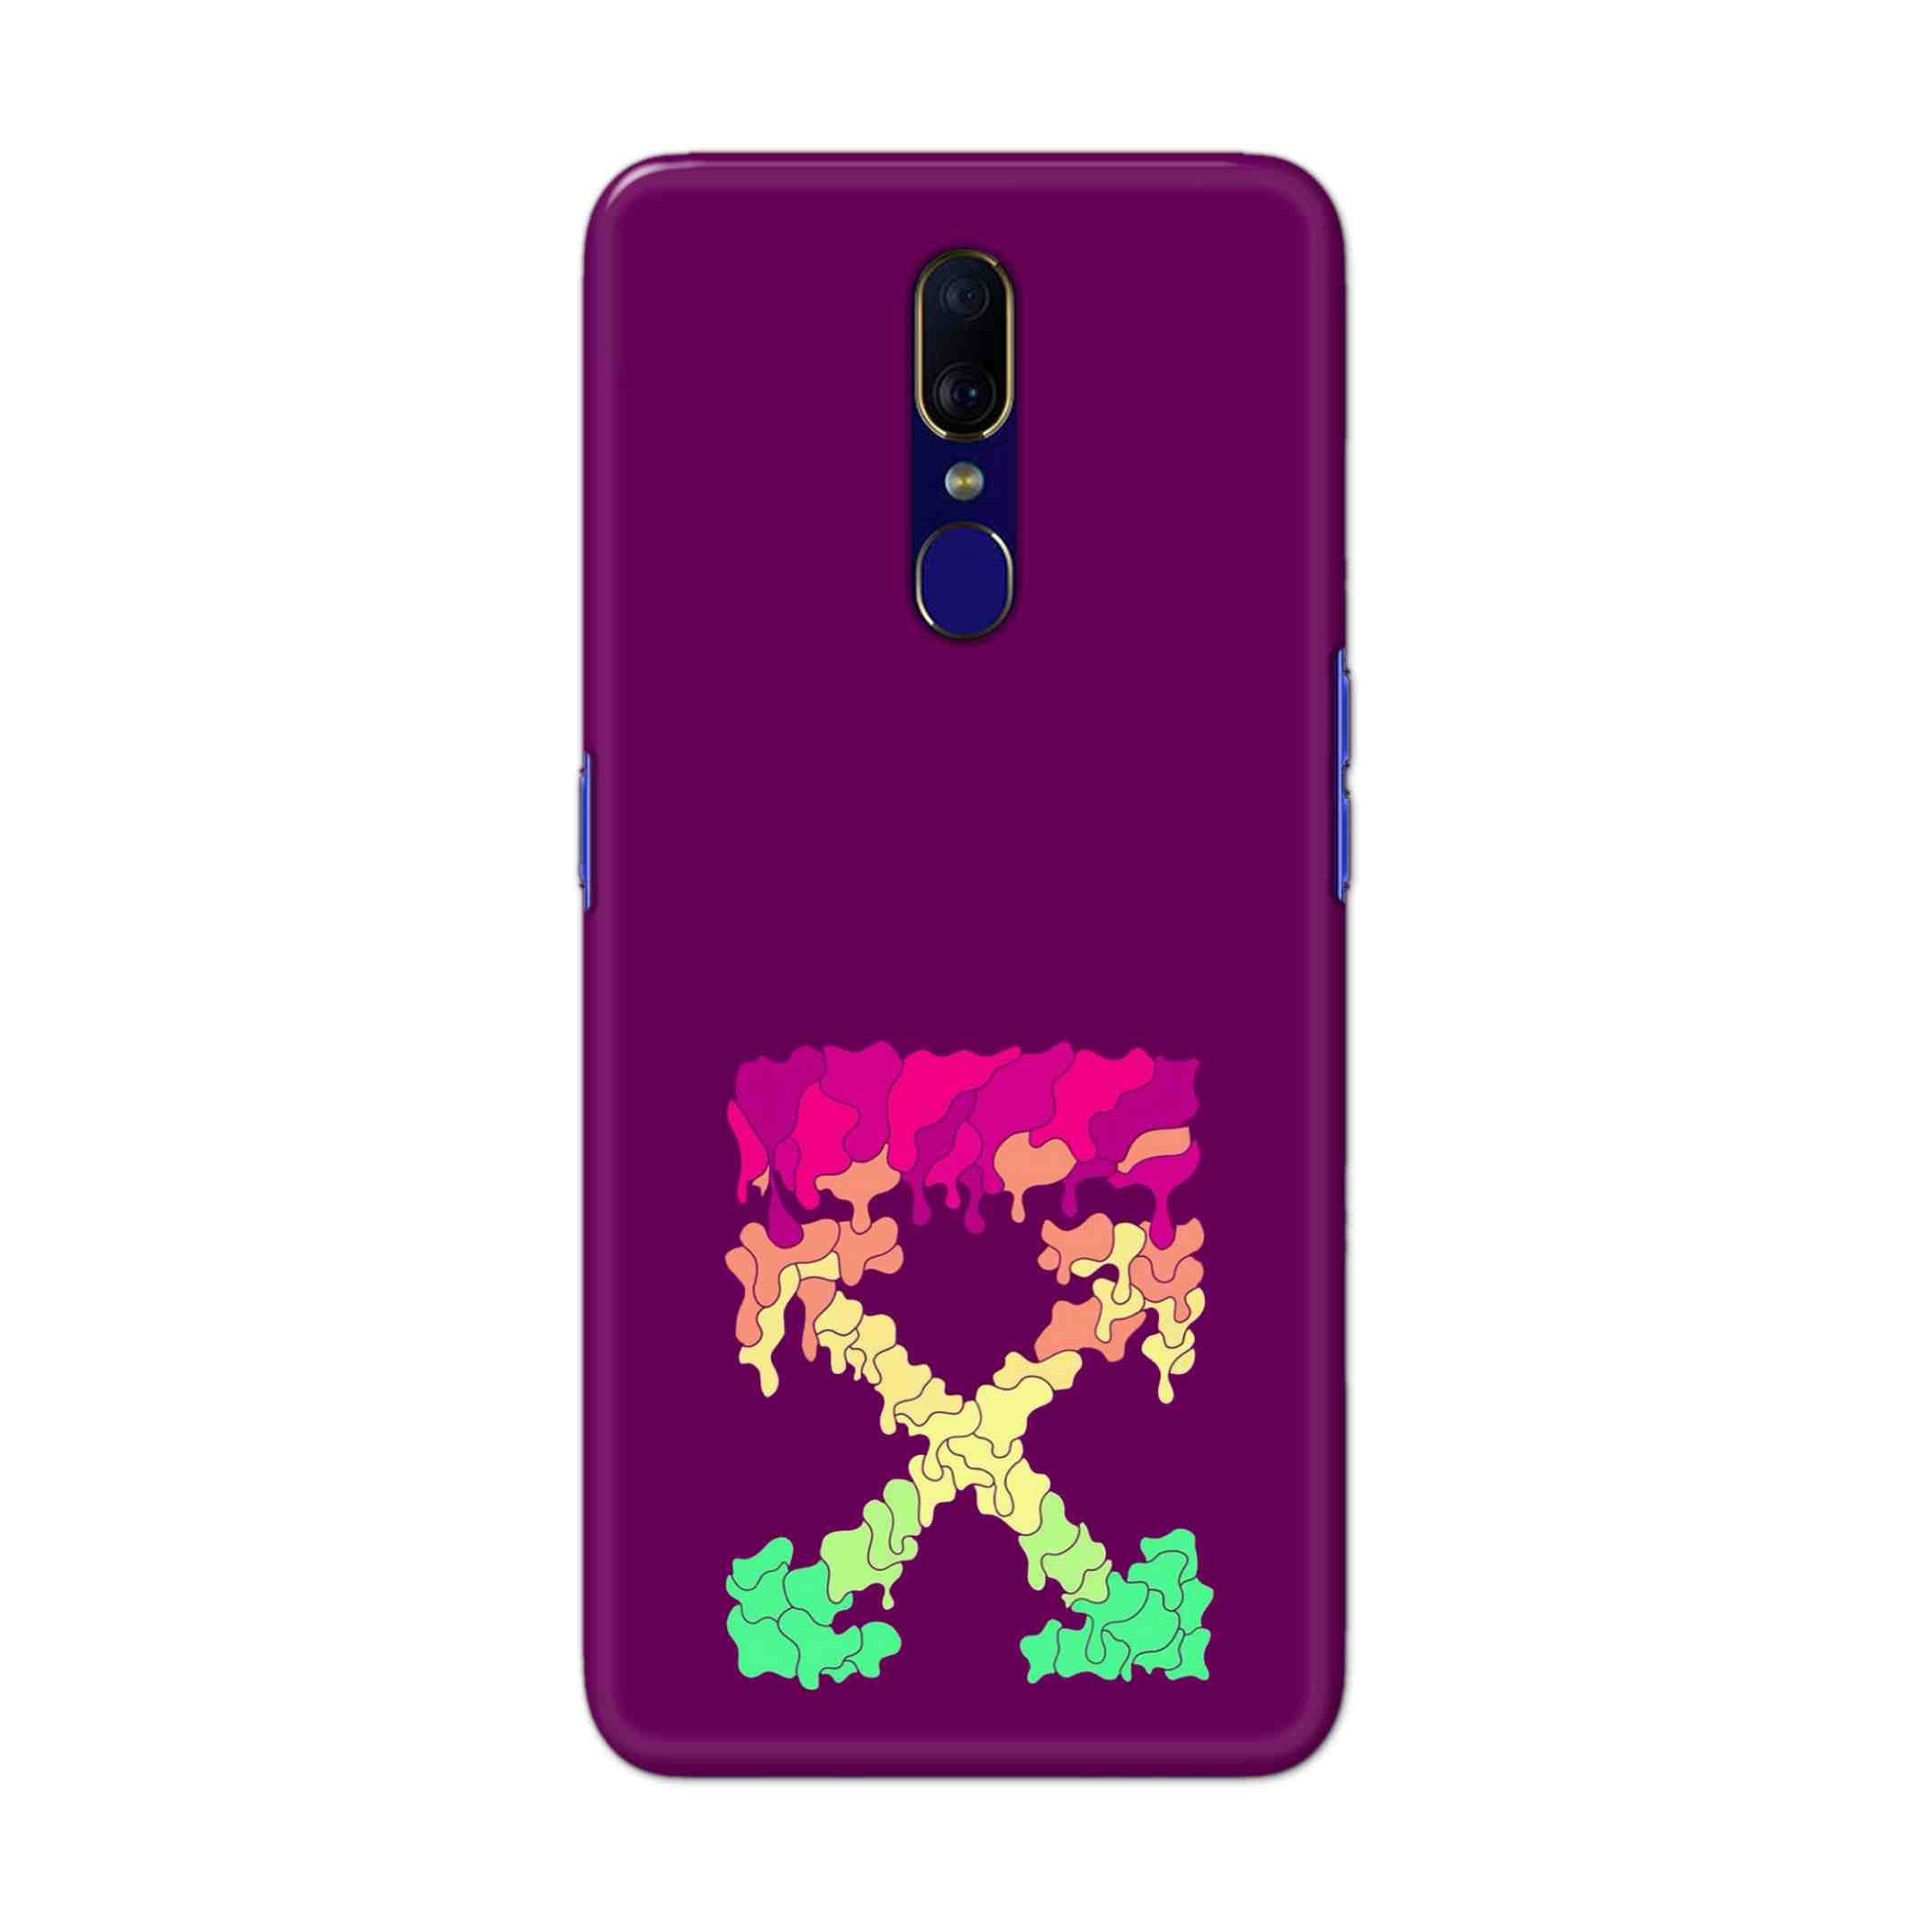 Buy X.O Hard Back Mobile Phone Case Cover For OPPO F11 Online